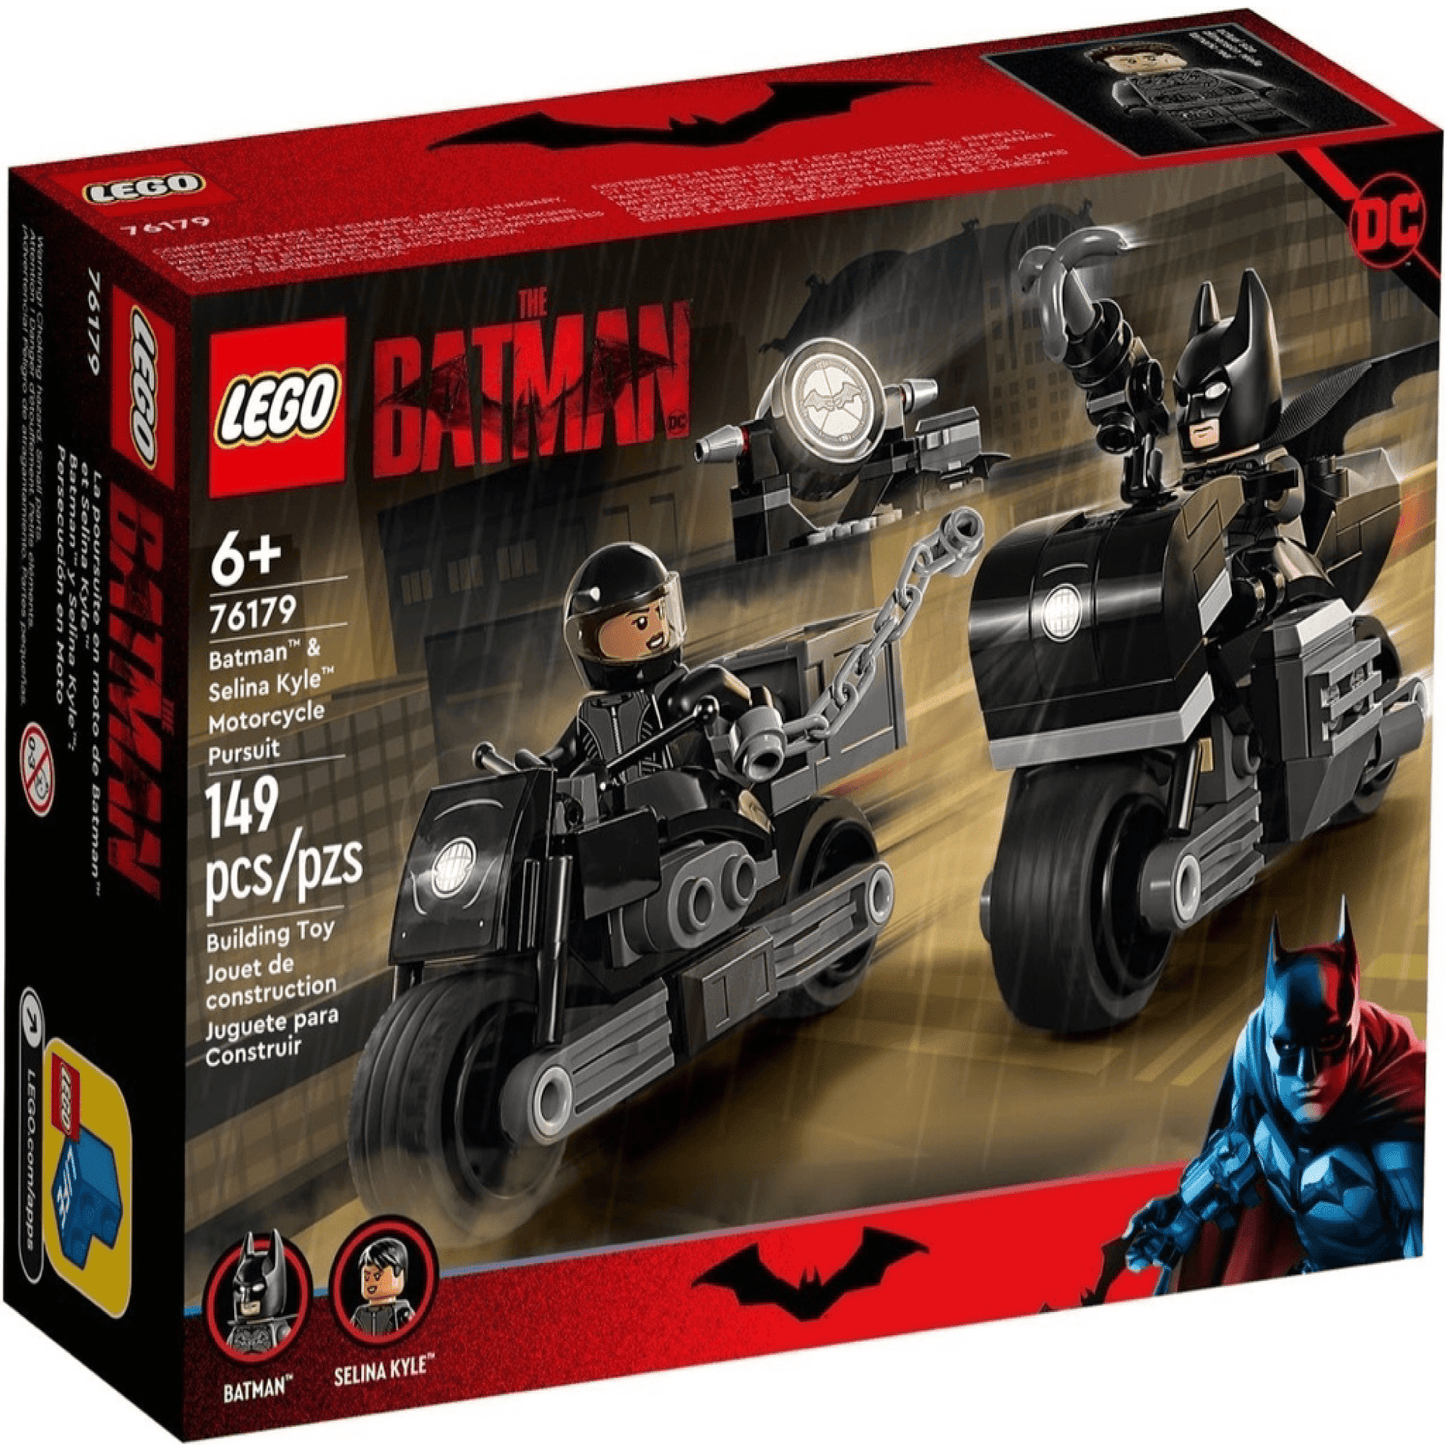 Batman & Selina Kyle Lego  Motorcycle